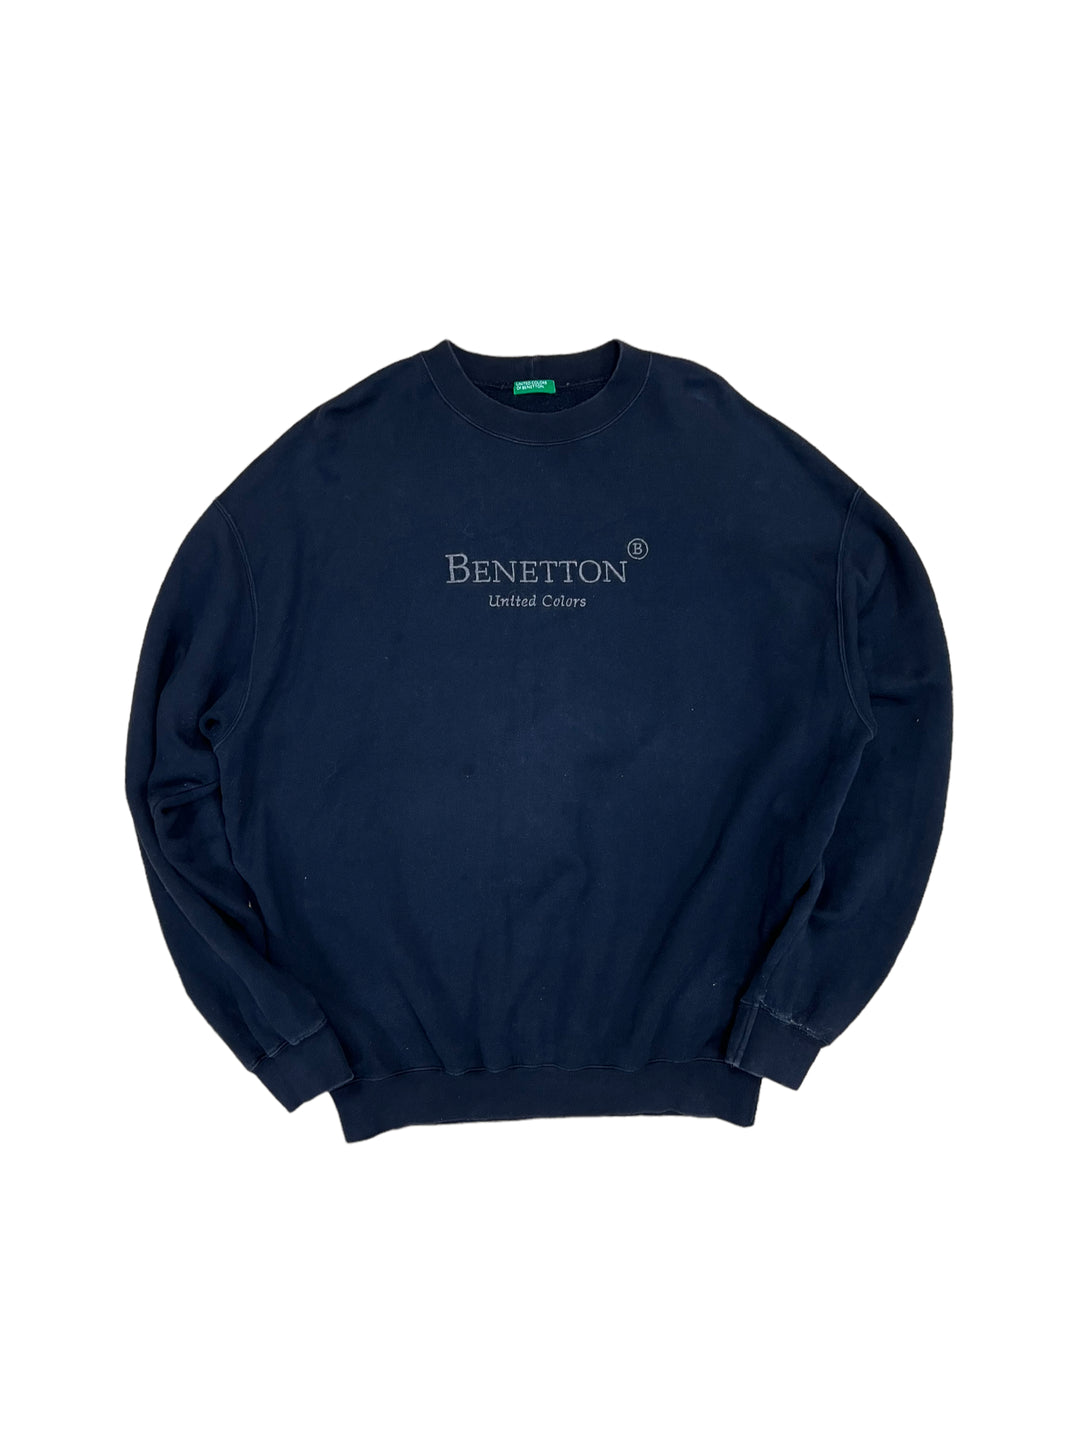 United Colors of Benetton Vintage Black Sweatshirt w/ Embroidered logo Men’s Extra Large